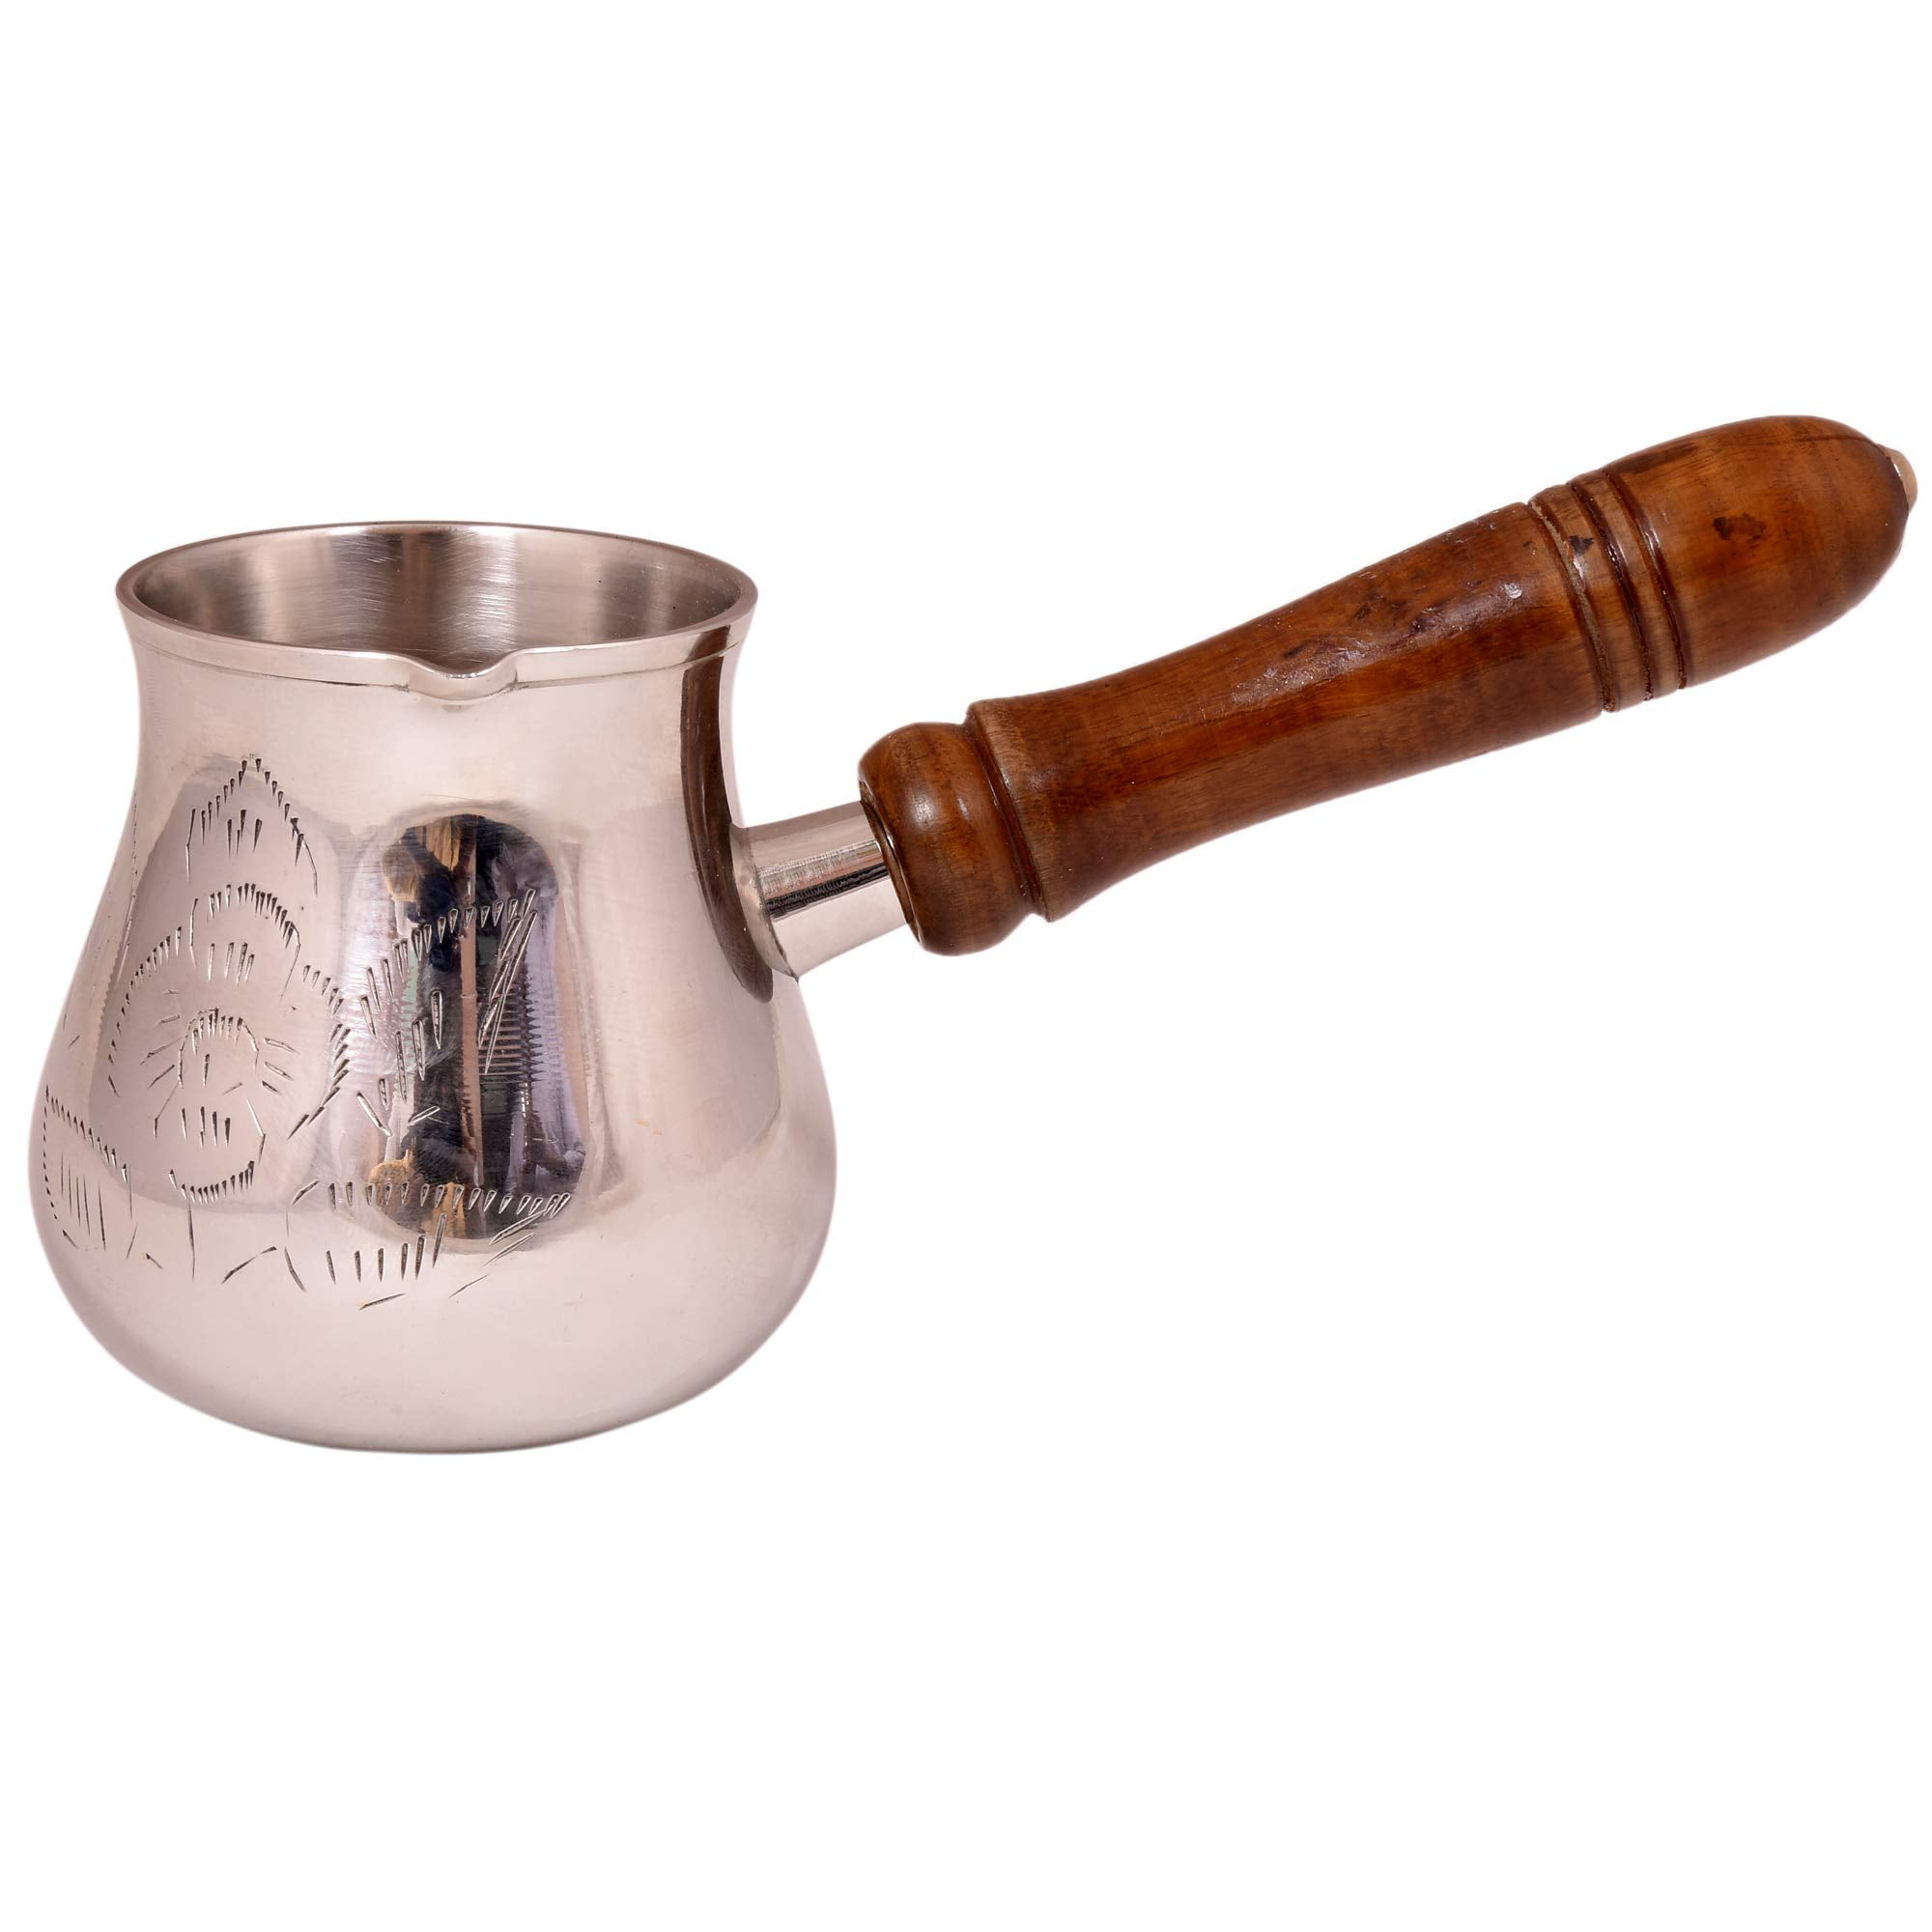 Details about   Brass Turkish Greek Arabic Coffee Pot Wood Handle Stovetop Coffee Maker 5" 